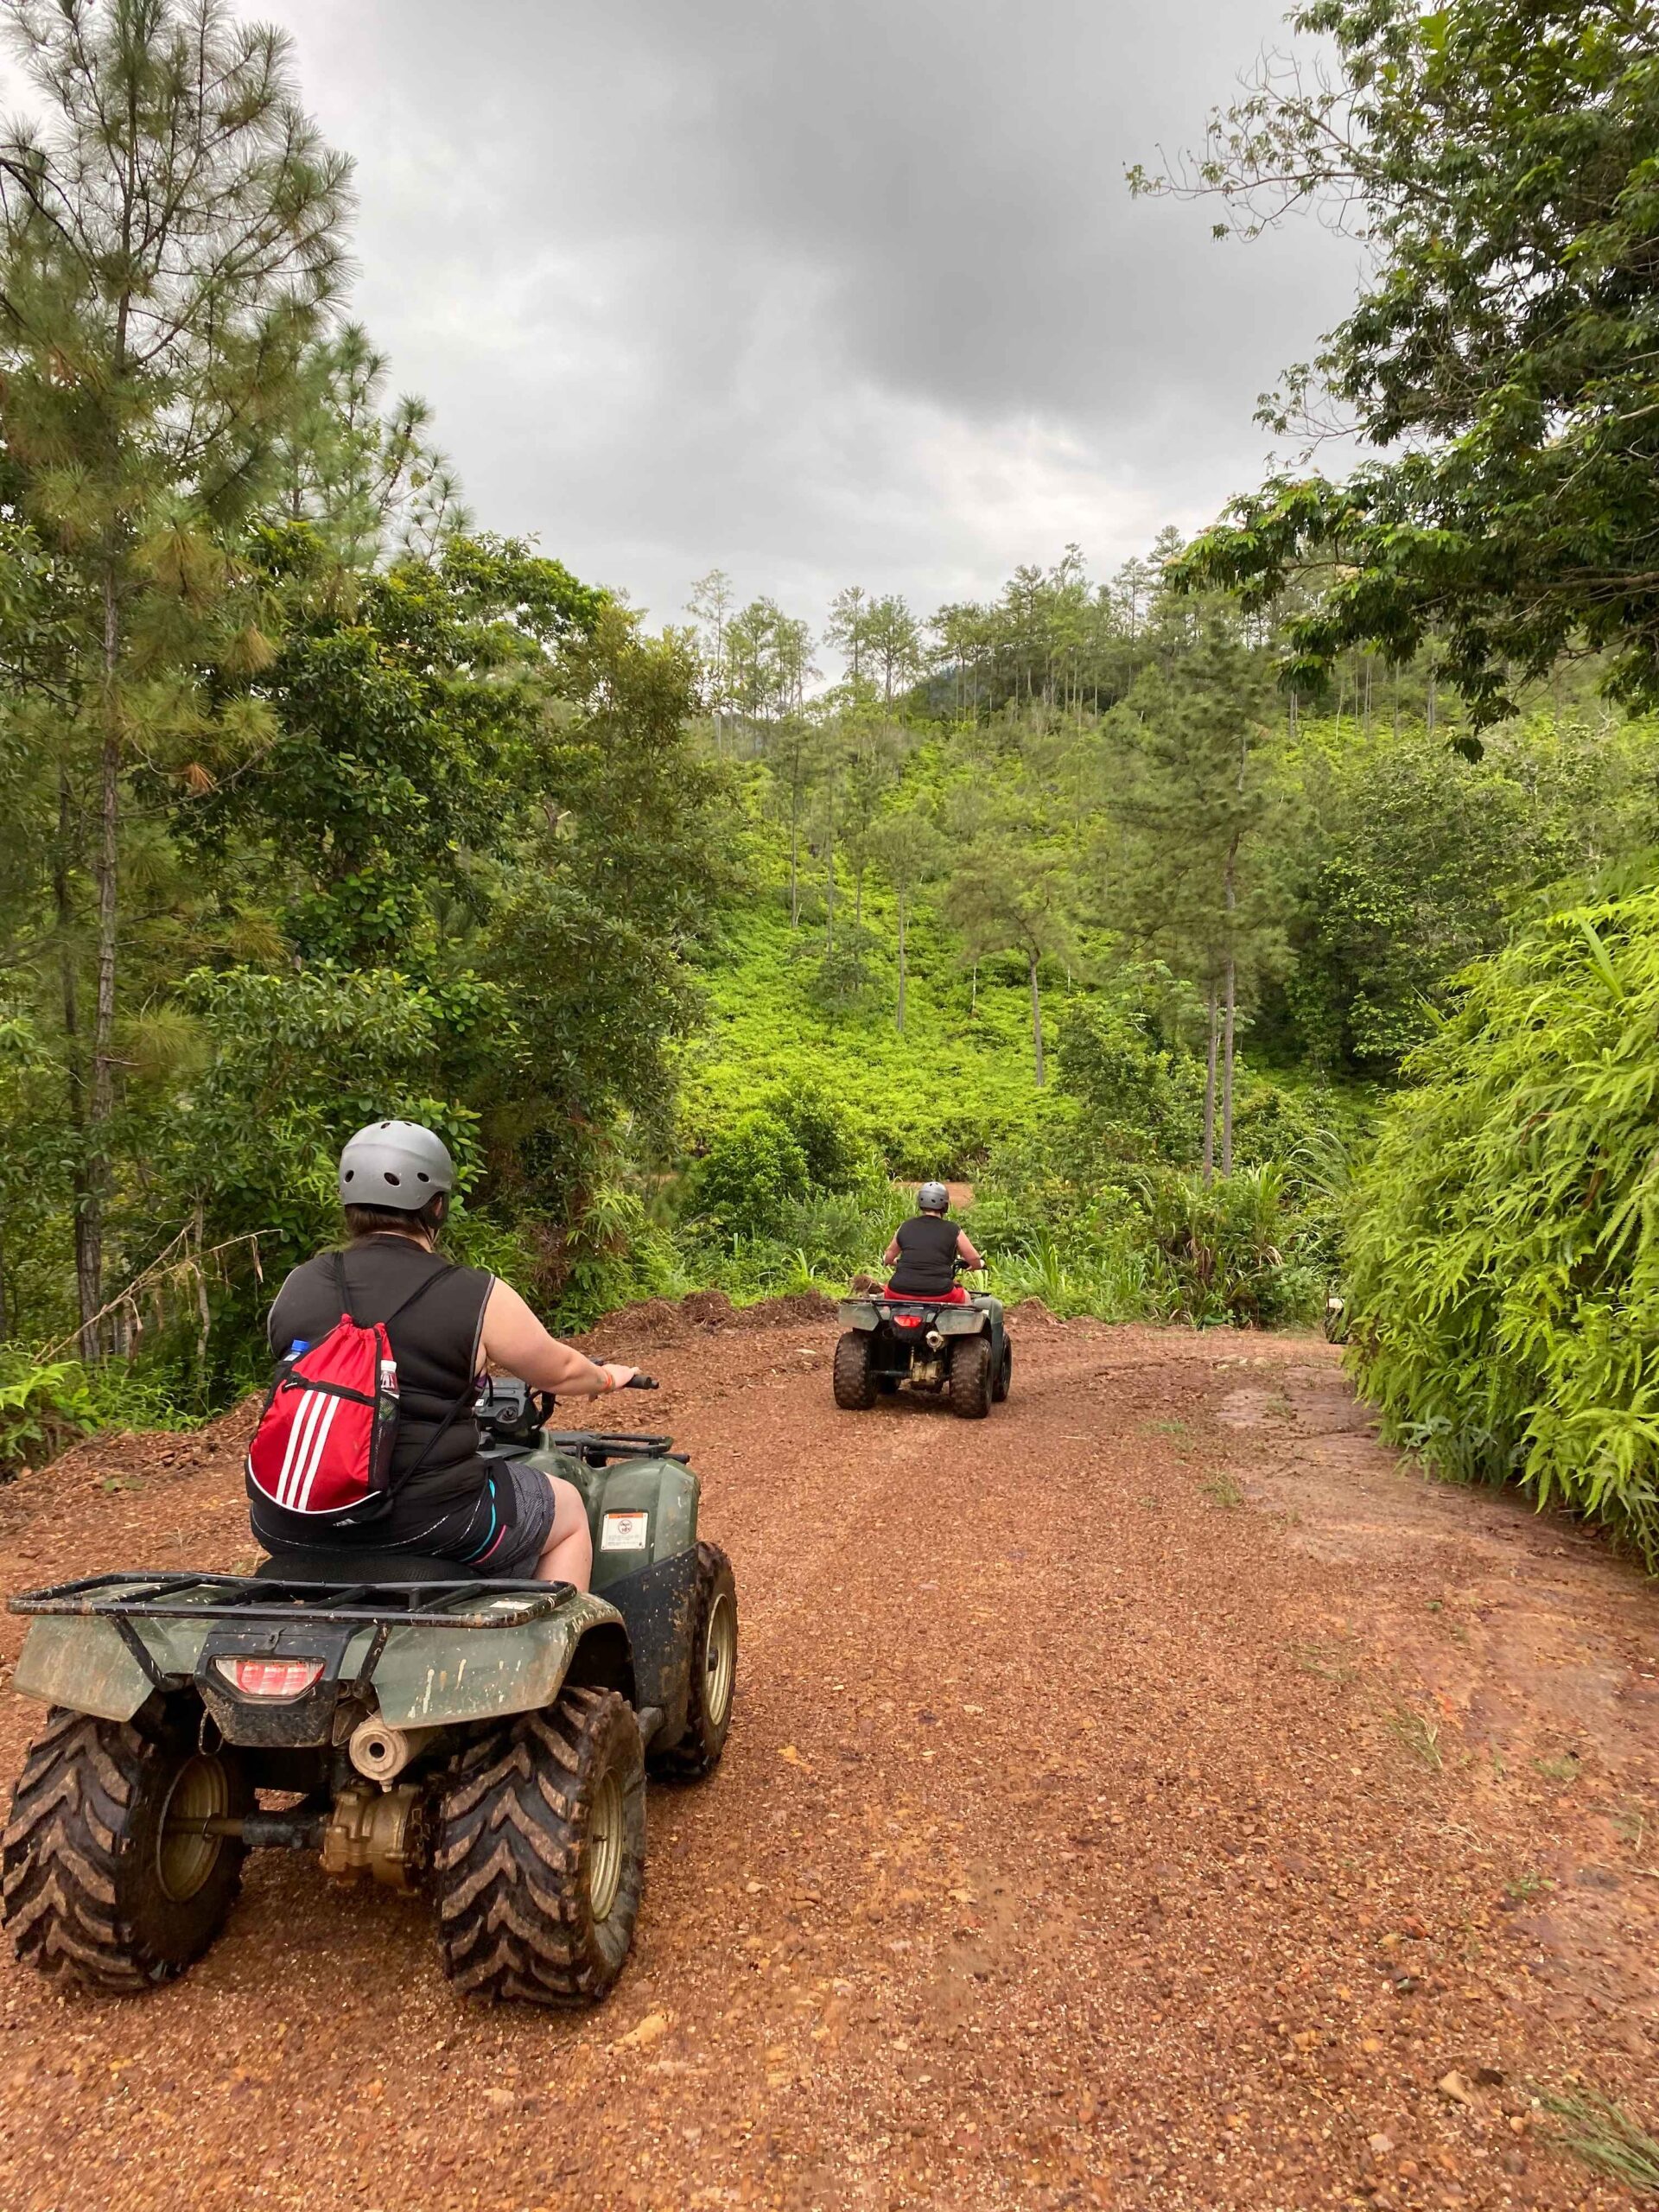 Two ATV riders enjoying a thrilling jungle adventure